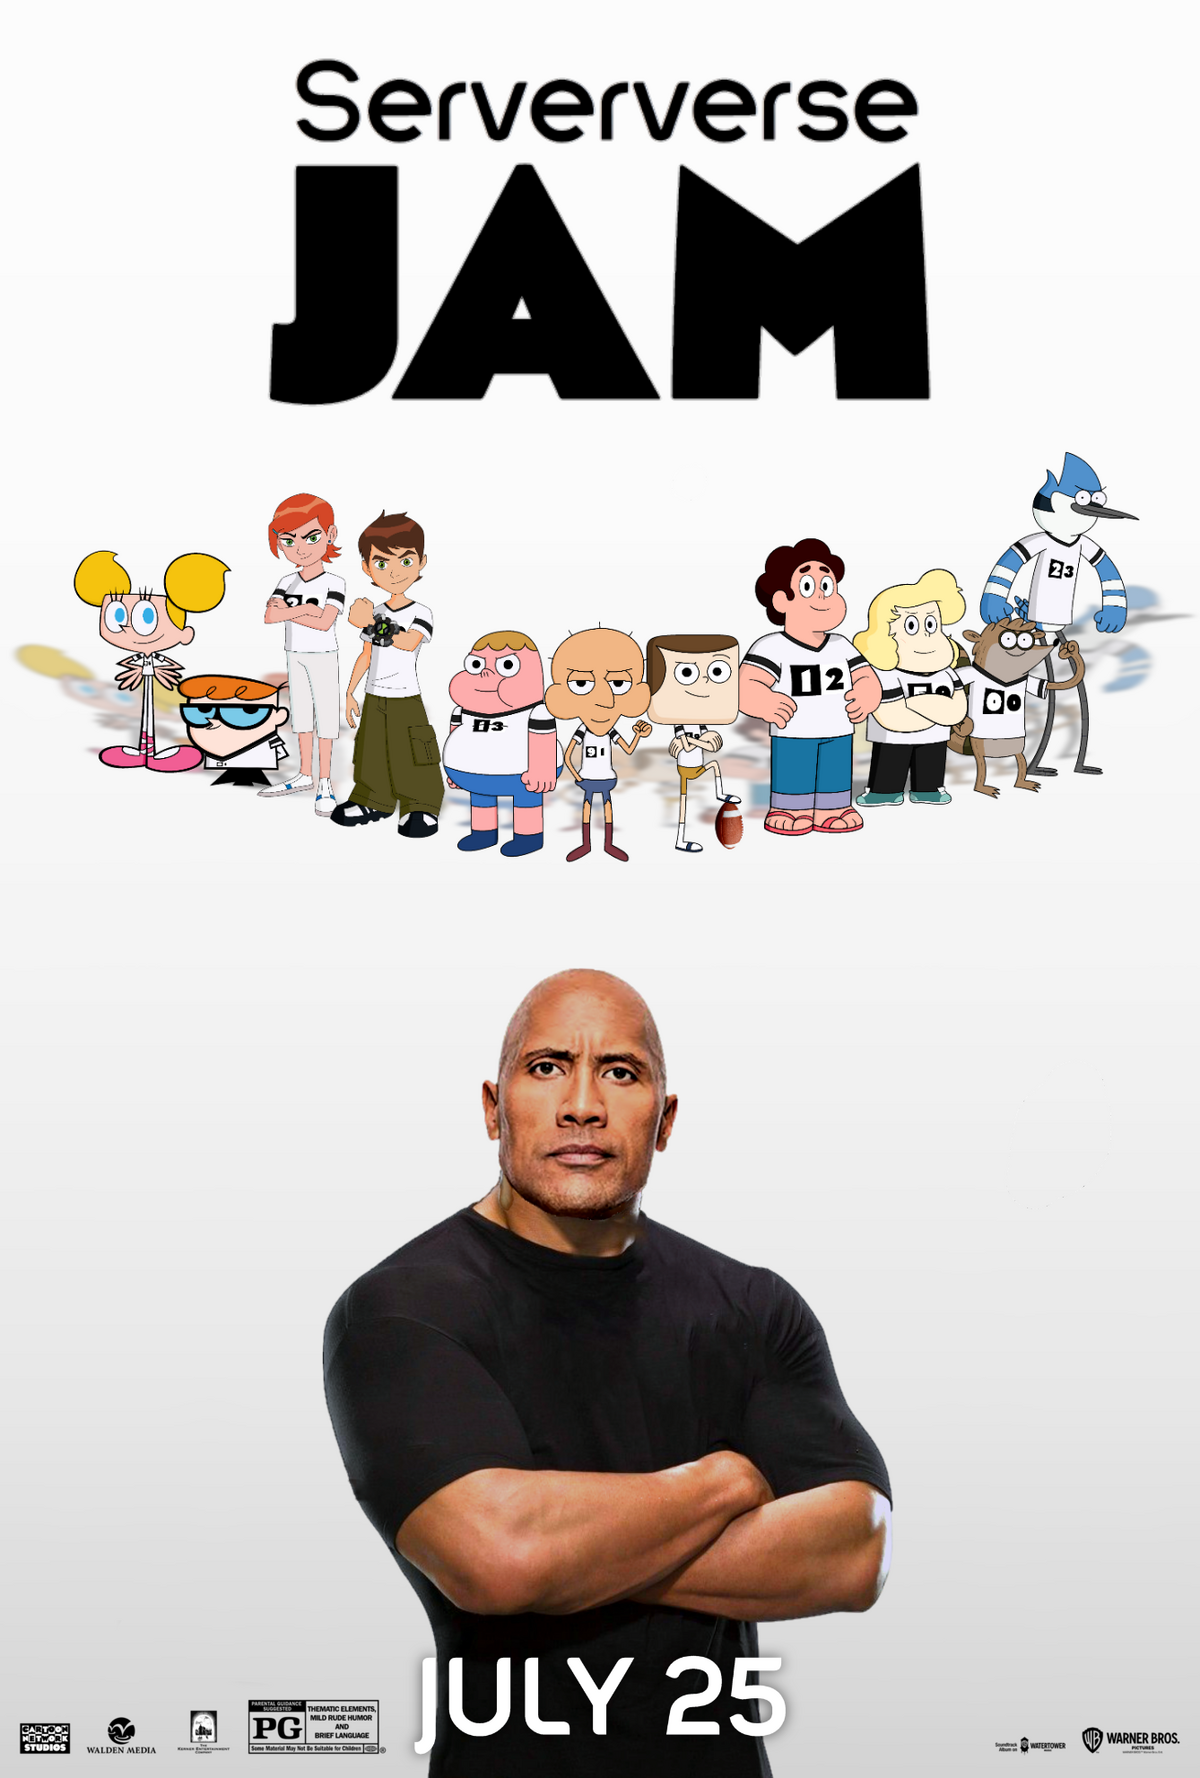 Space Jam, The Cartoon Network Wiki